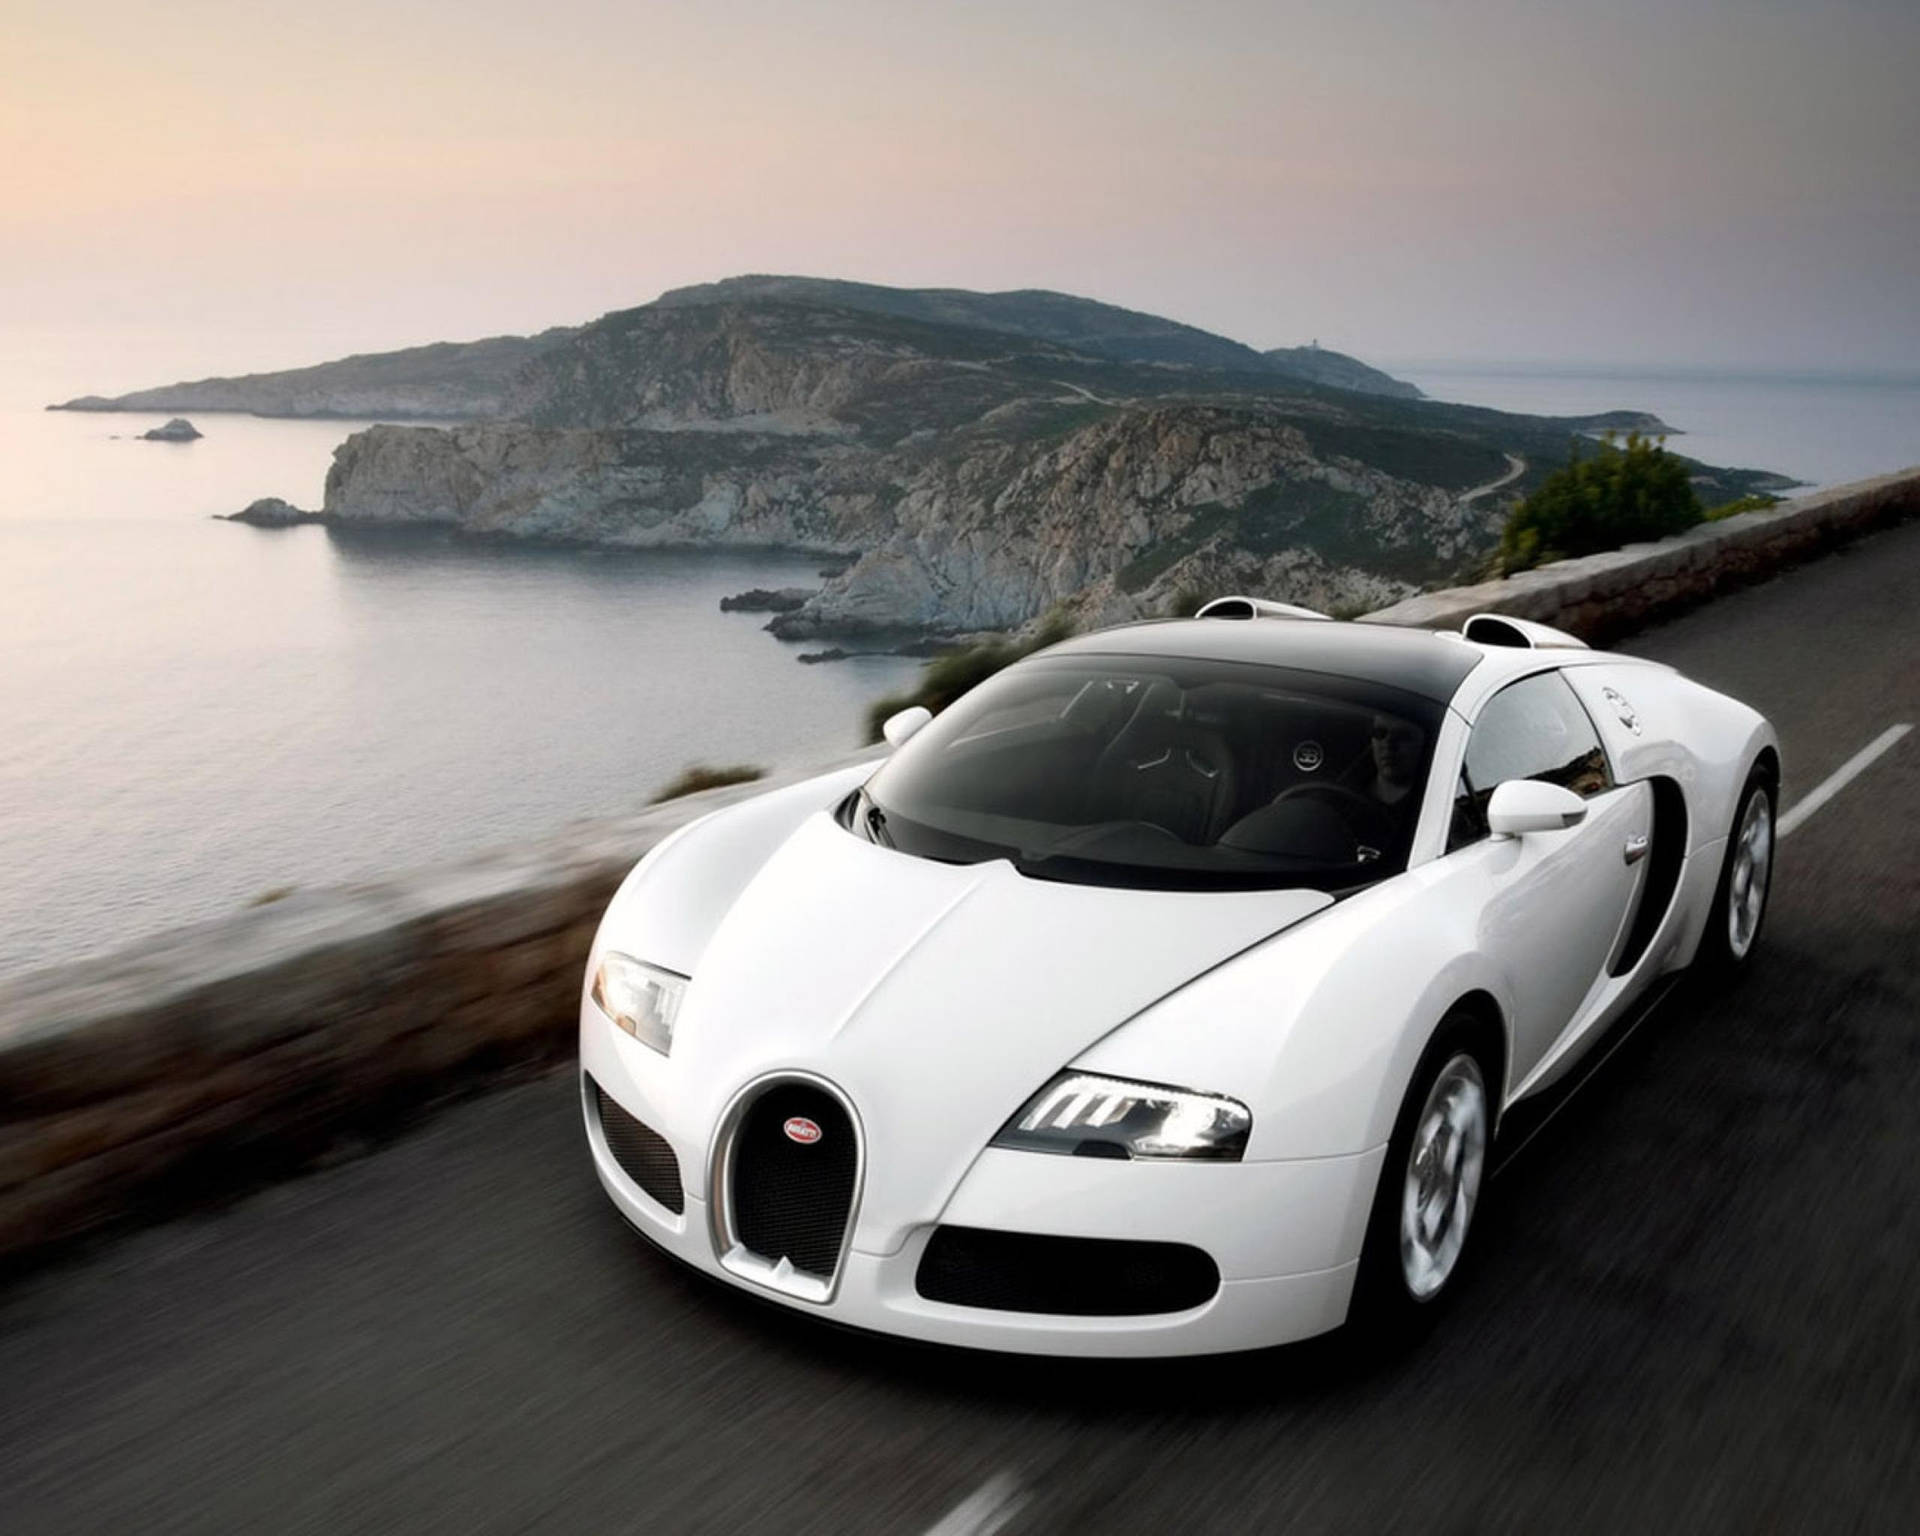 Top 999+ Bugatti Wallpaper Full HD, 4K✅Free to Use